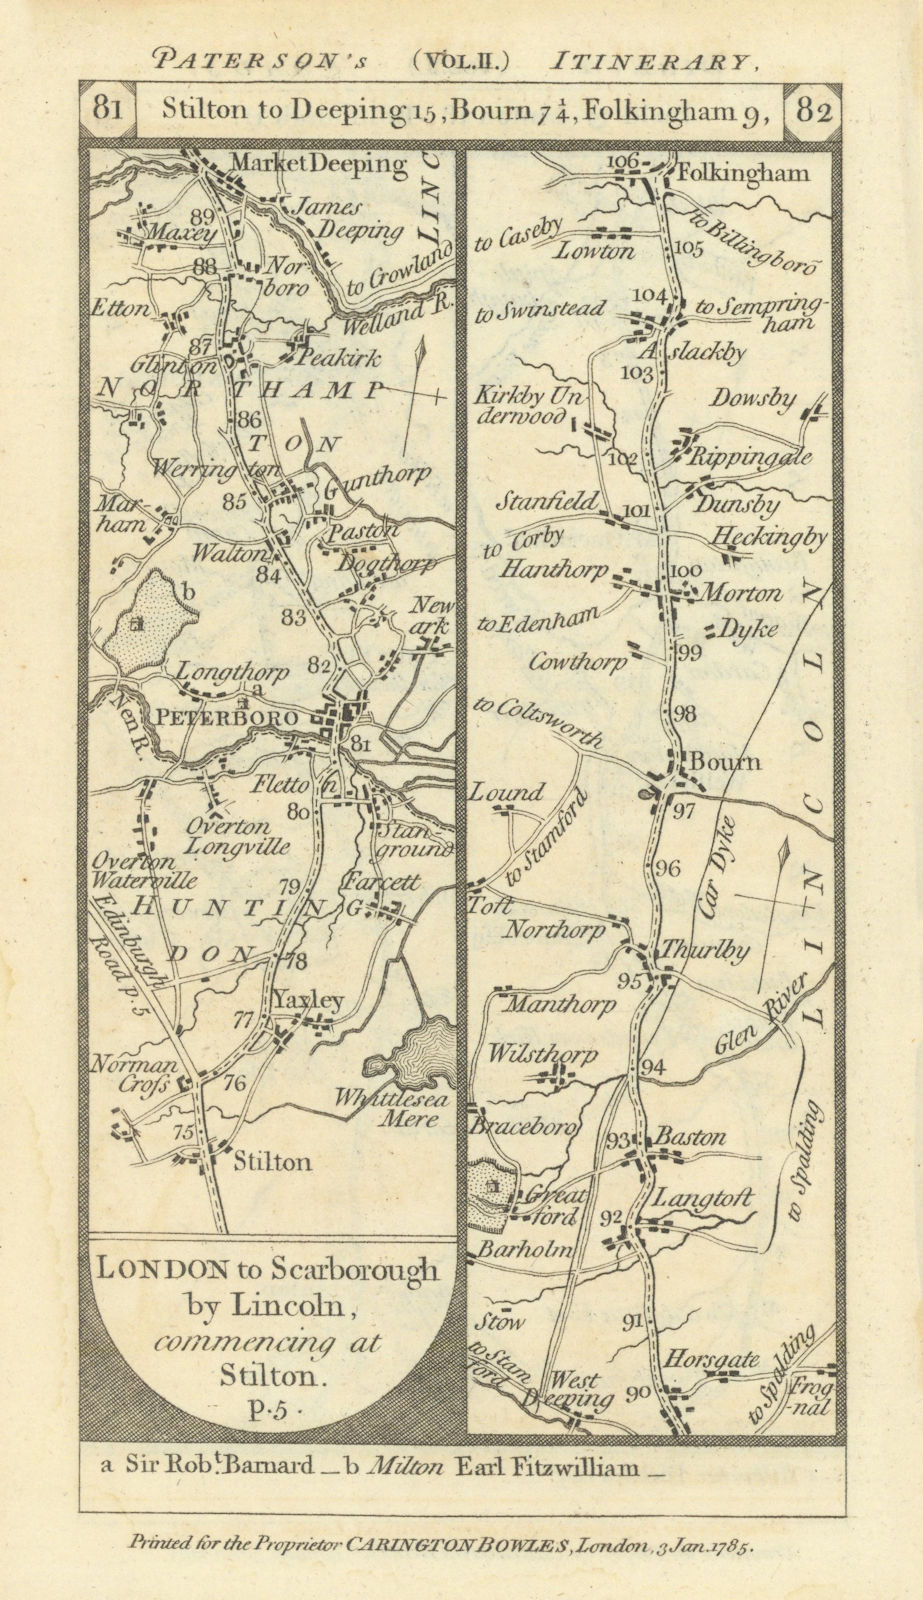 Yaxley-Peterborough-Thurlby-Morton-Folkingham road strip map PATERSON 1785